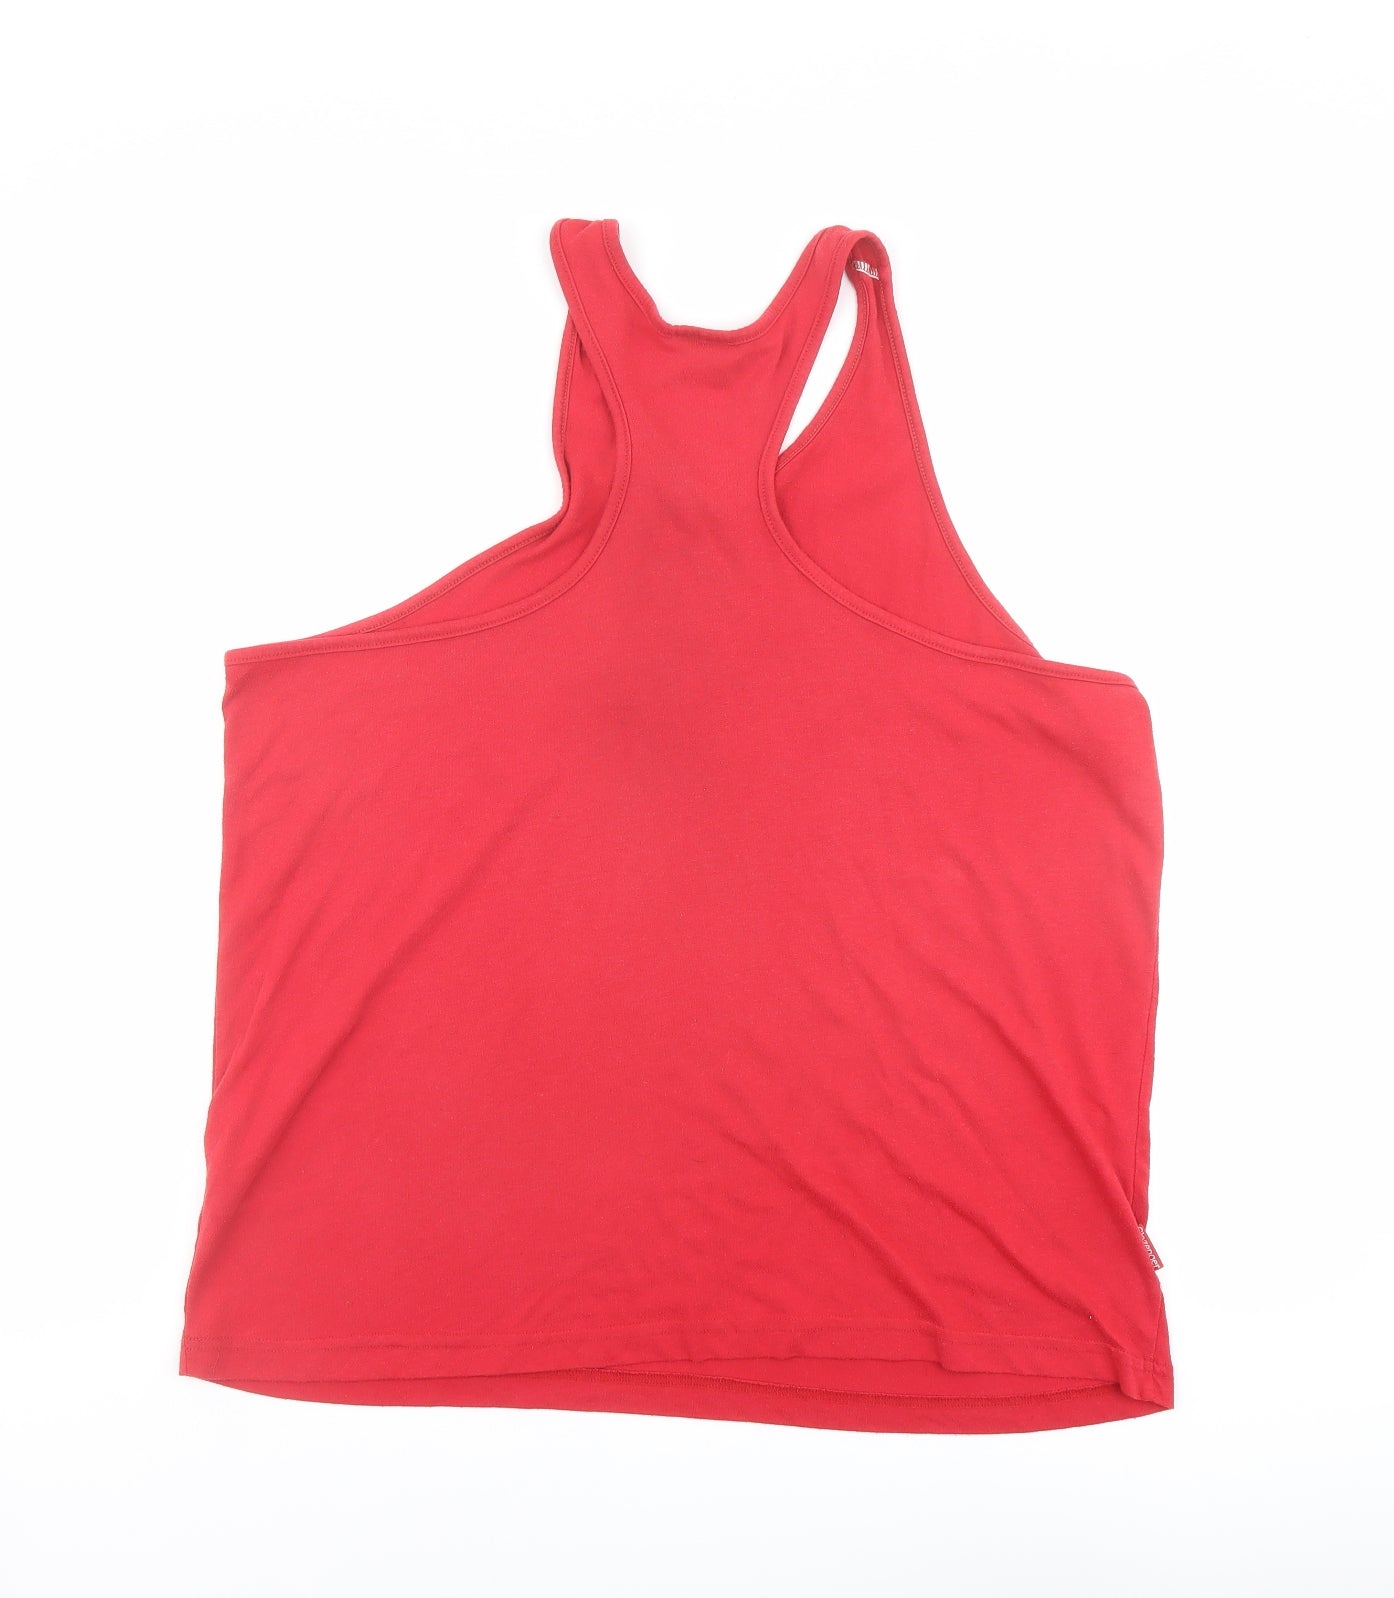 Slazenger Mens Red Polyester T-Shirt Size XL Round Neck